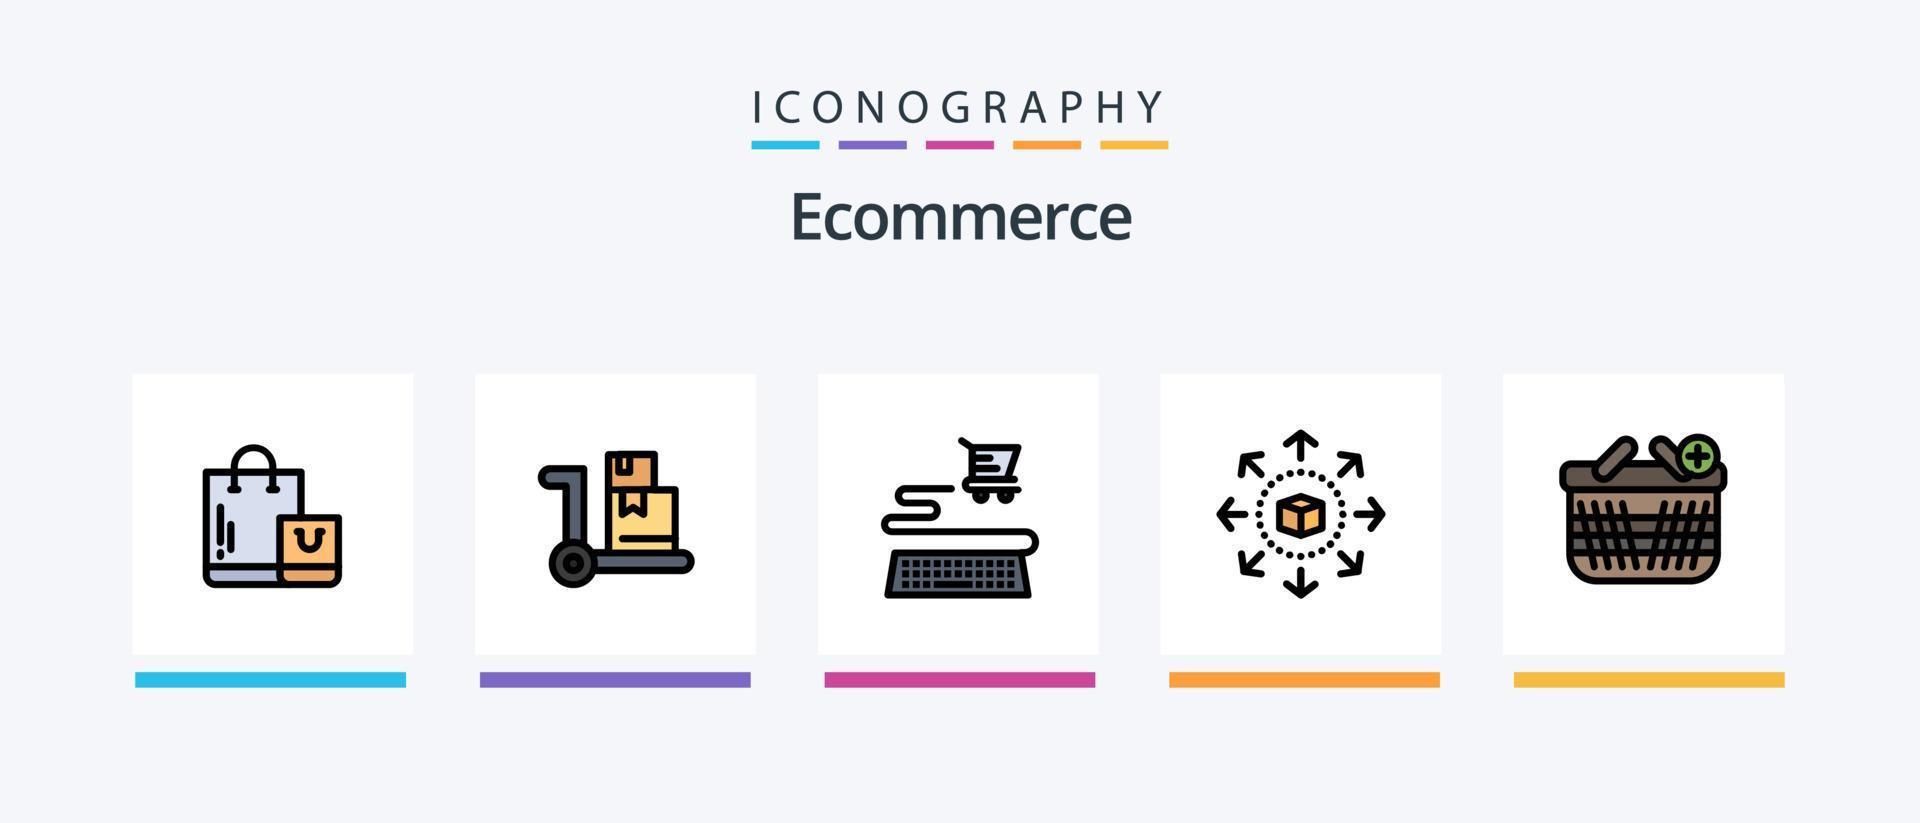 E-Commerce-Linie gefüllt 5 Icon Pack inklusive Store. E-Commerce. Hand. Einkaufsladen. Shop. kreatives Symboldesign vektor